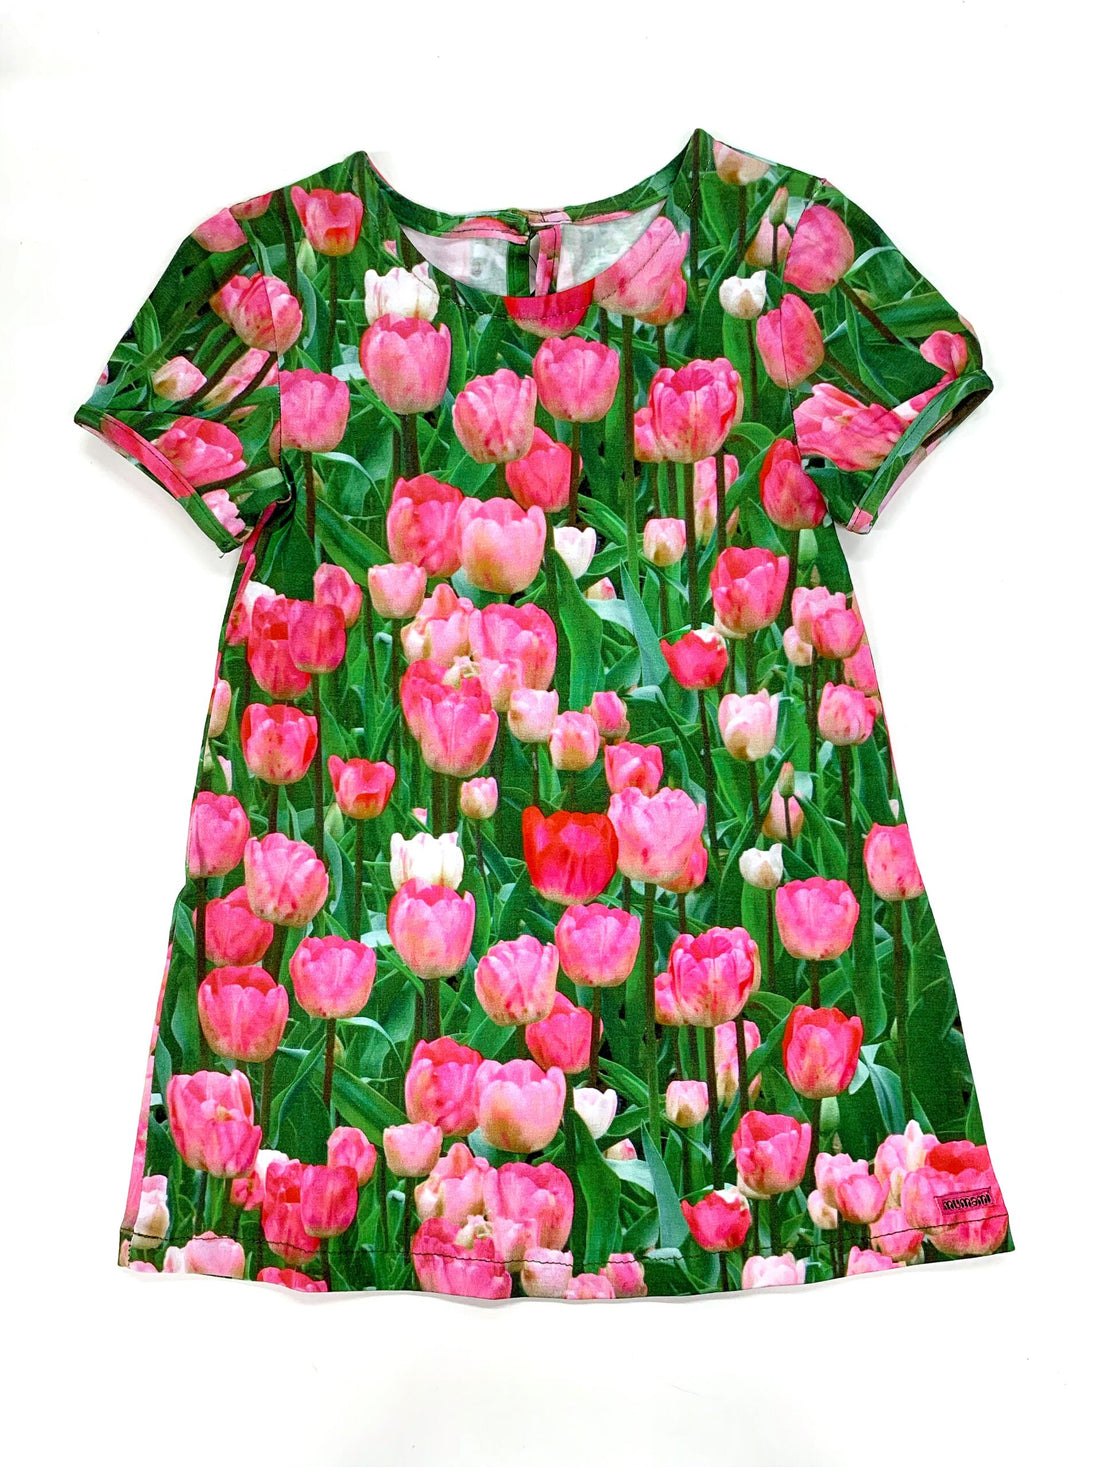 Pink Tulips Dress